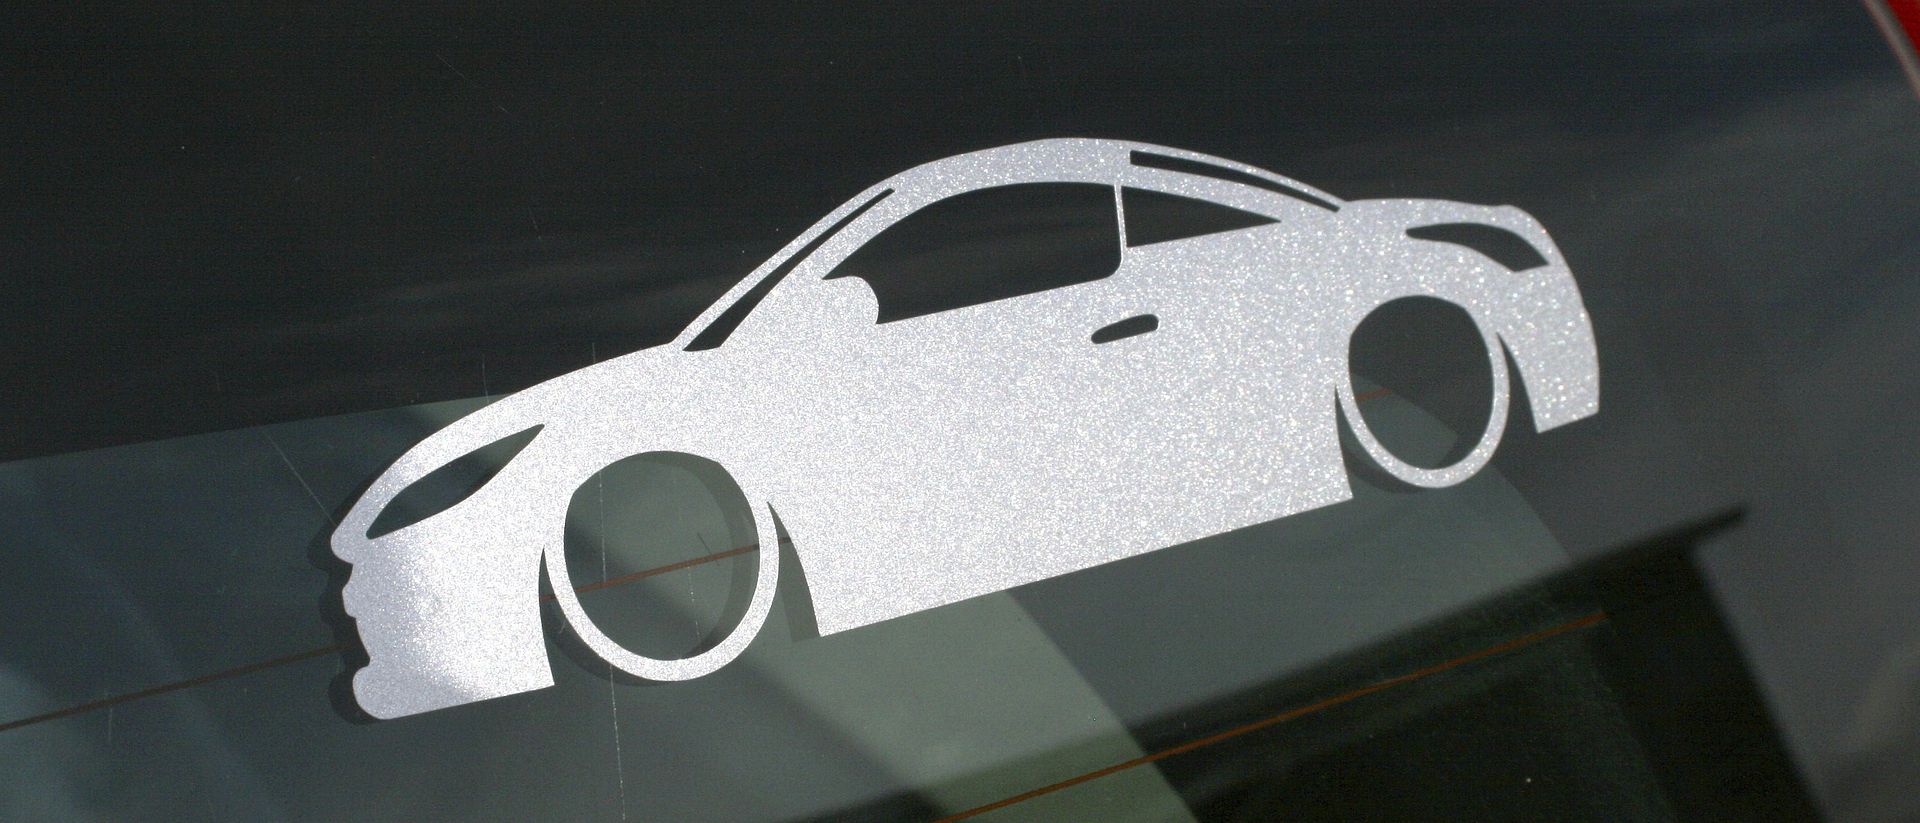  photo Peugeot RCZ slammed stanced car sticker_zpsfmpyaws3.jpg